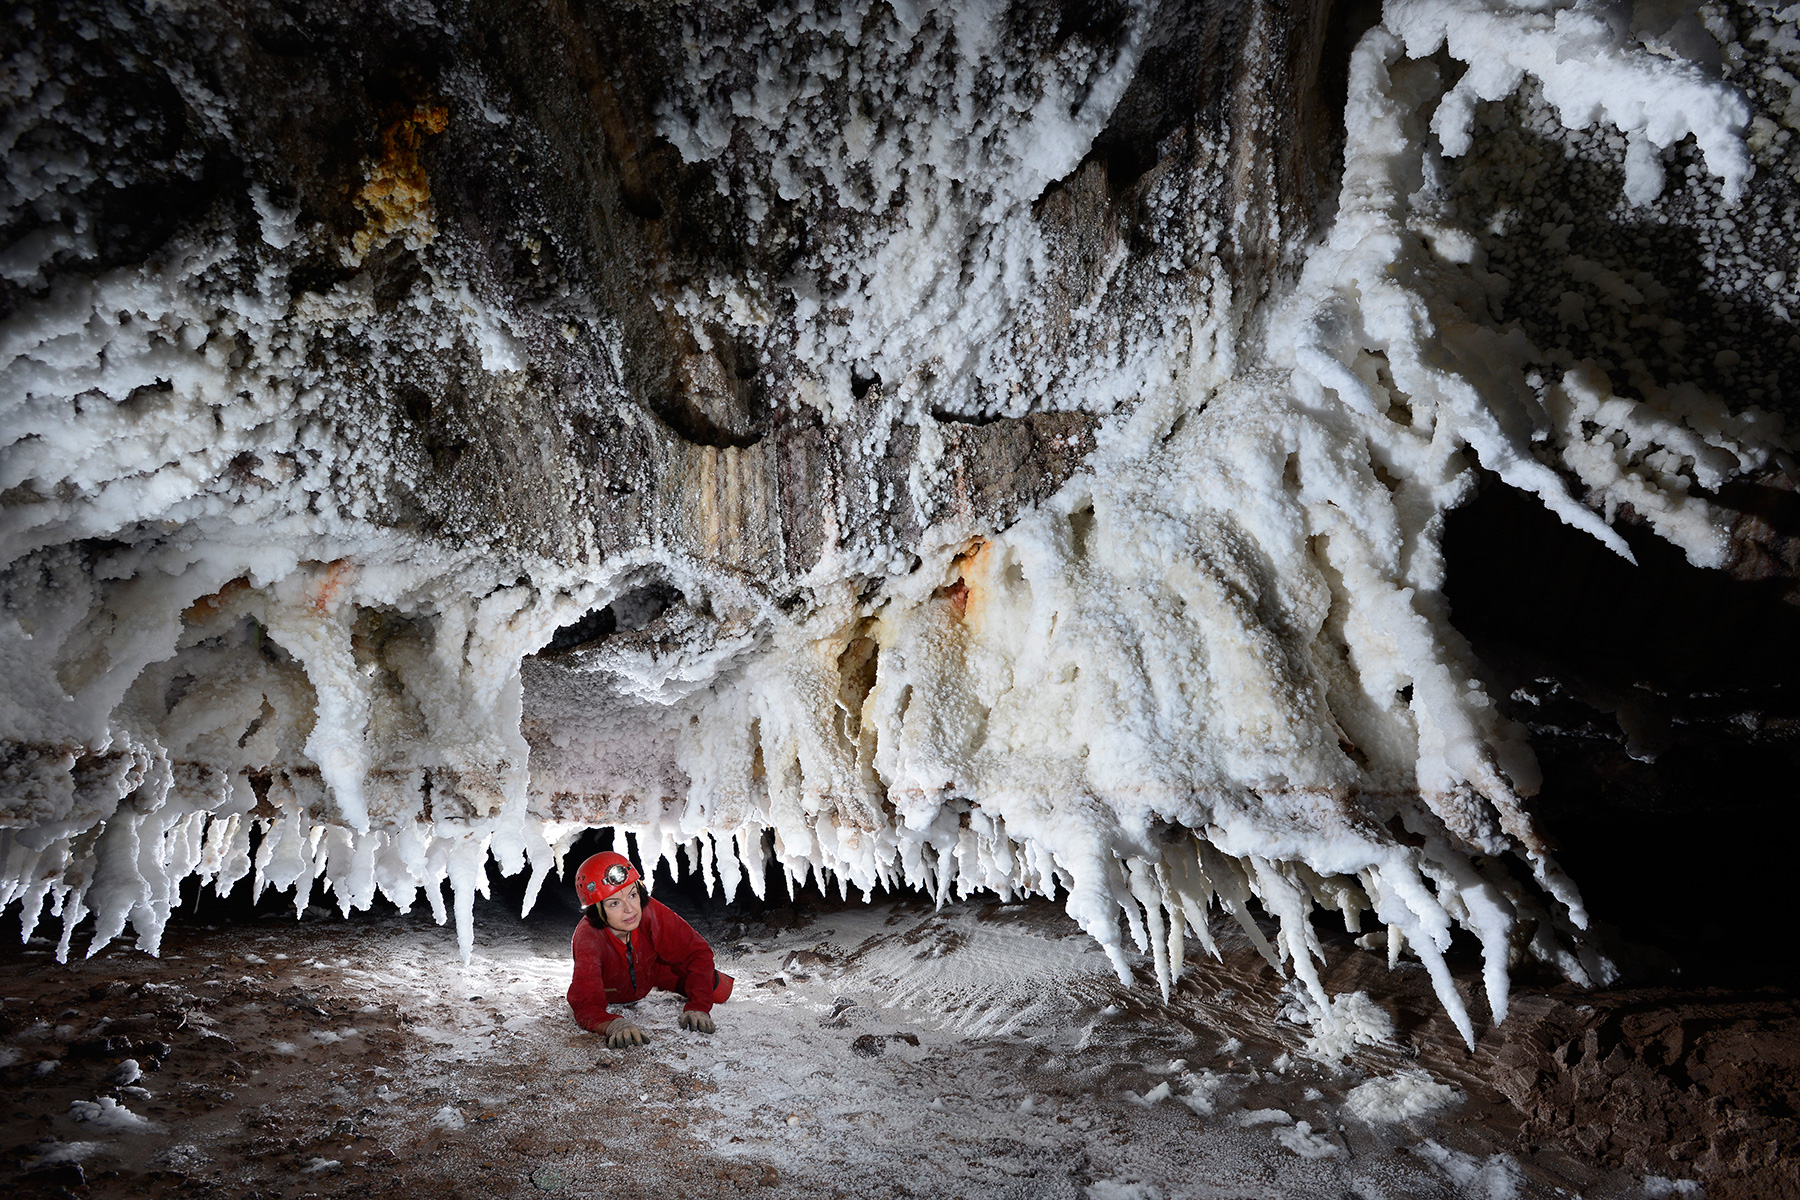 3N Cave(Namakdan, Qeshm, Iran) - Passage bas avec stalactites massives de sel